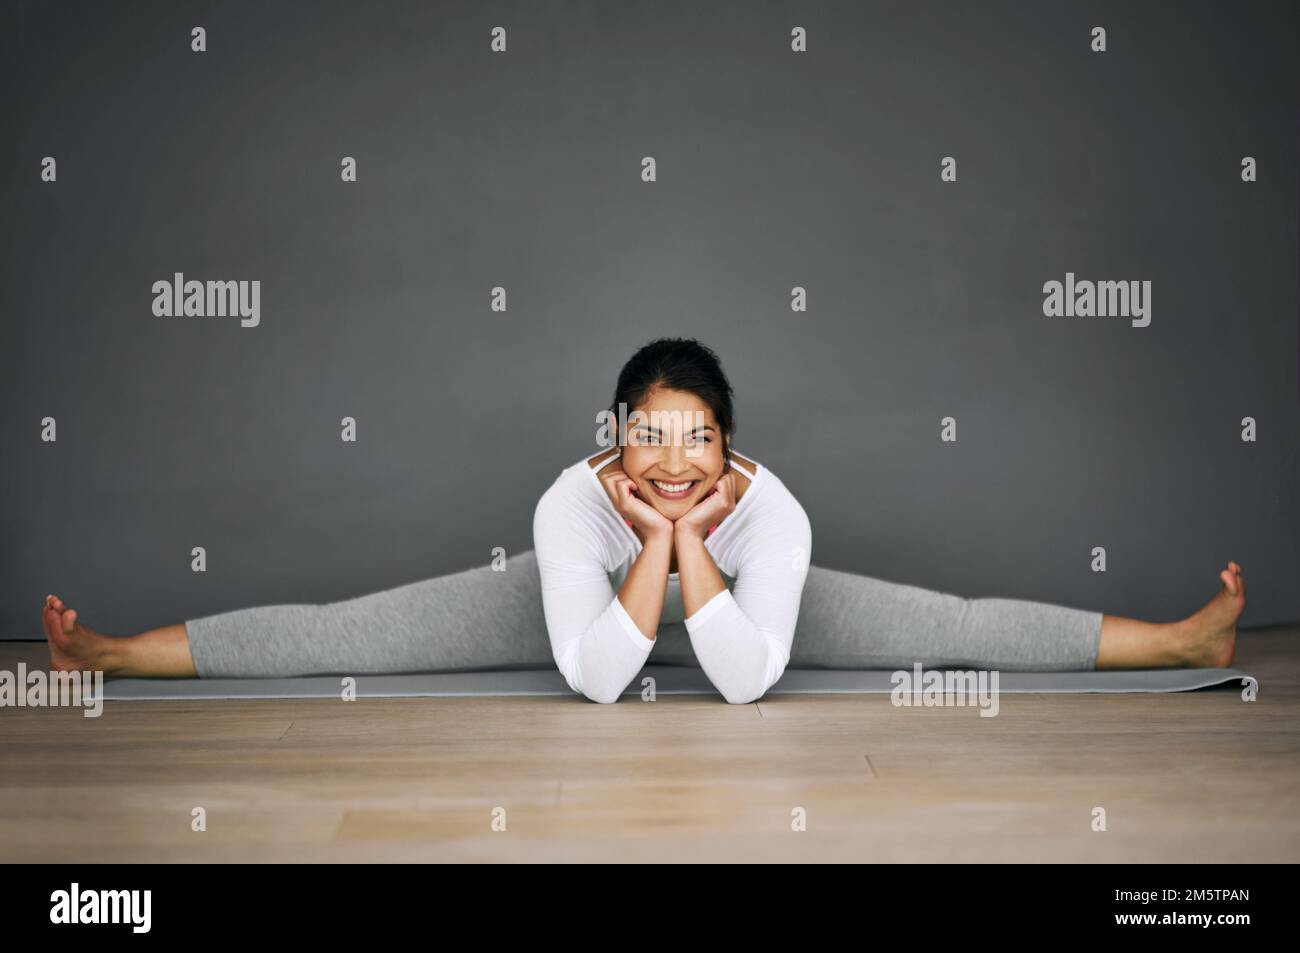 Woman doing yoga frontal split stretch Stock Photo by Photology75